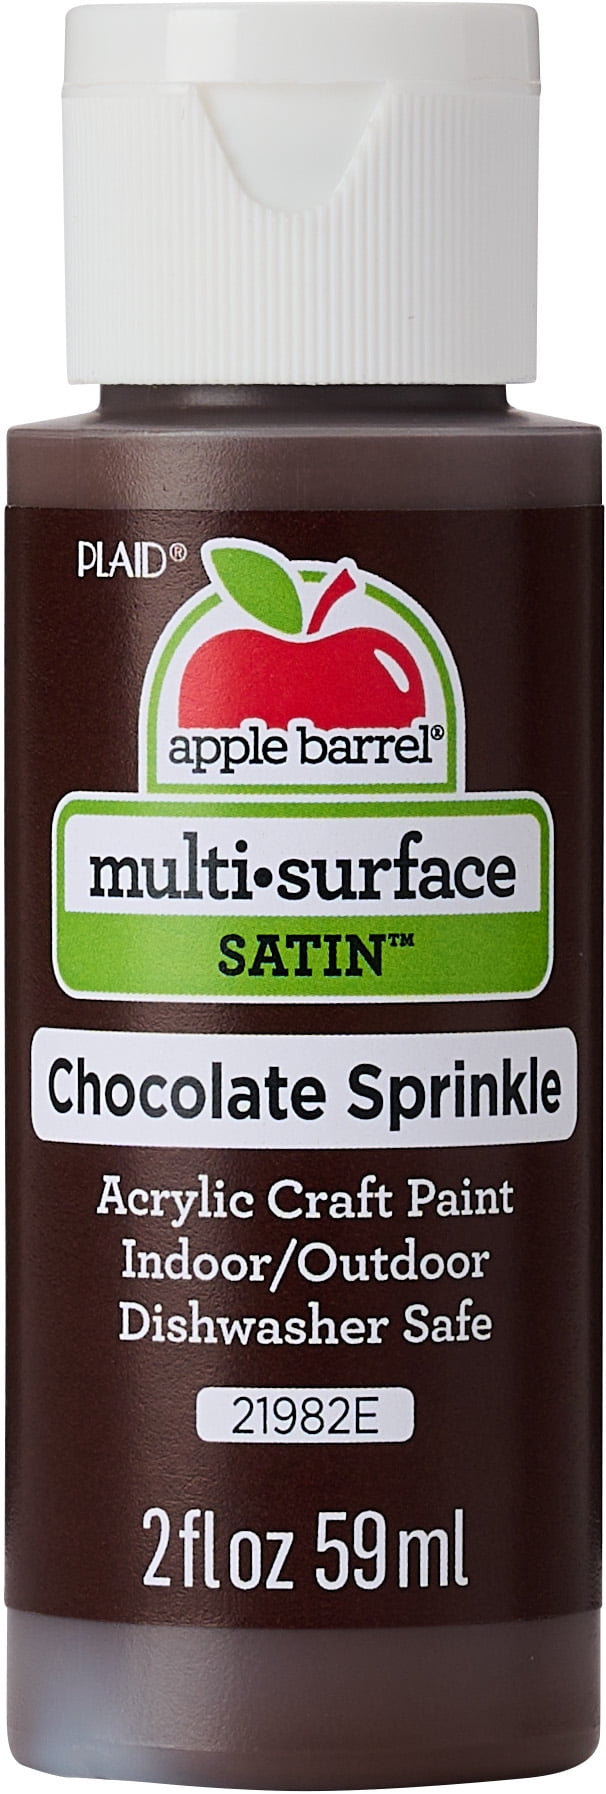 Apple Barrel Apple Barrel Multi-Surface Satin - Chocolate Sprinkle